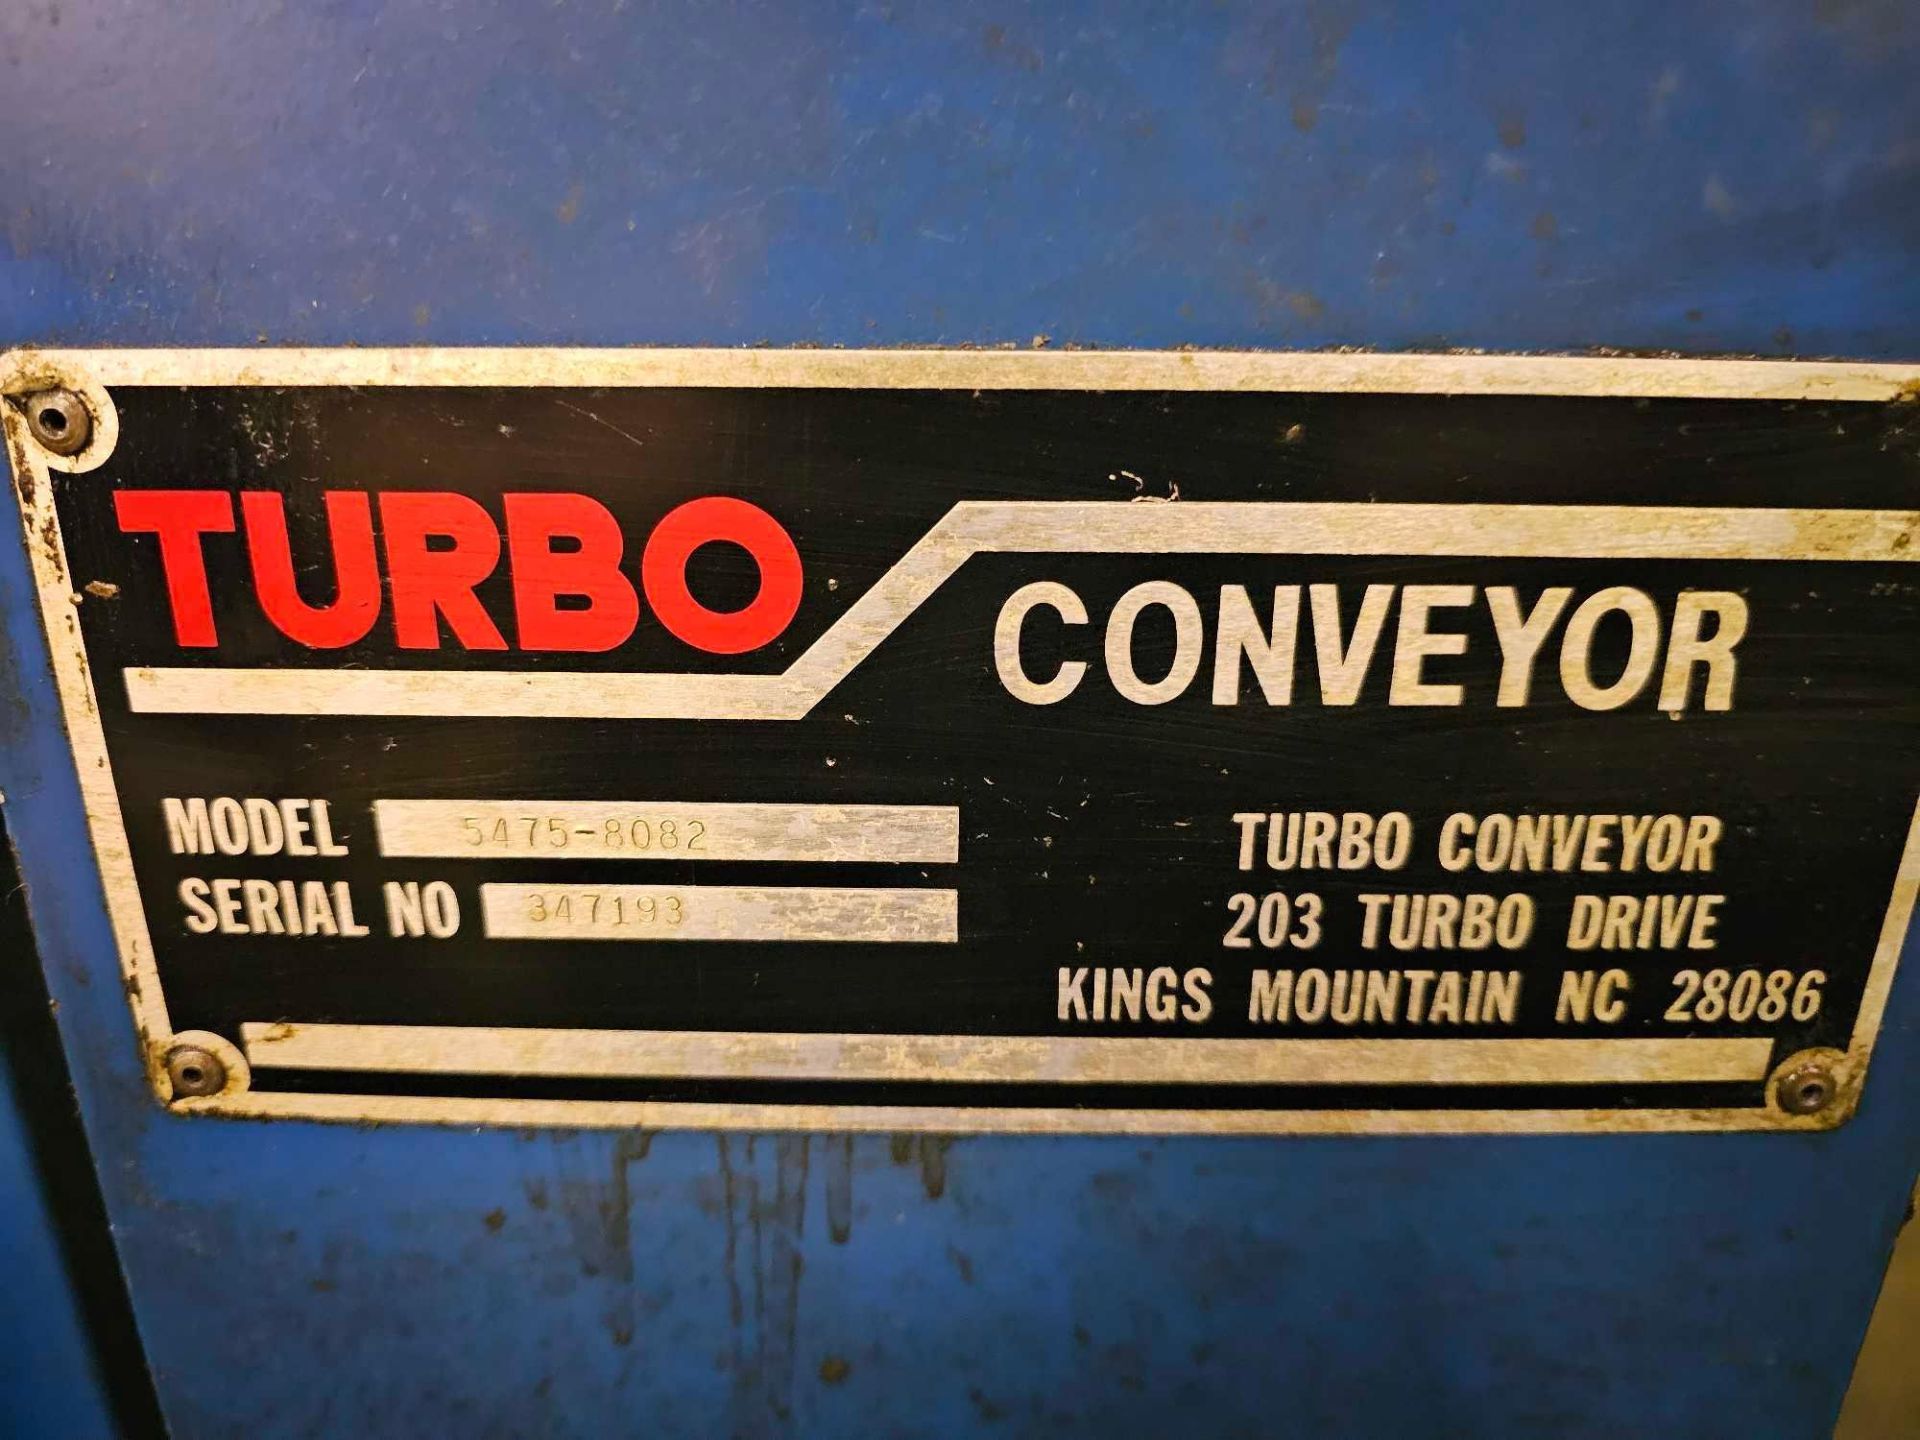 1999 DAEWOO LYNX 200 CNC TURNING CENTER (NO TOOLING) WITH TURBO CONVEYOR - Image 9 of 16